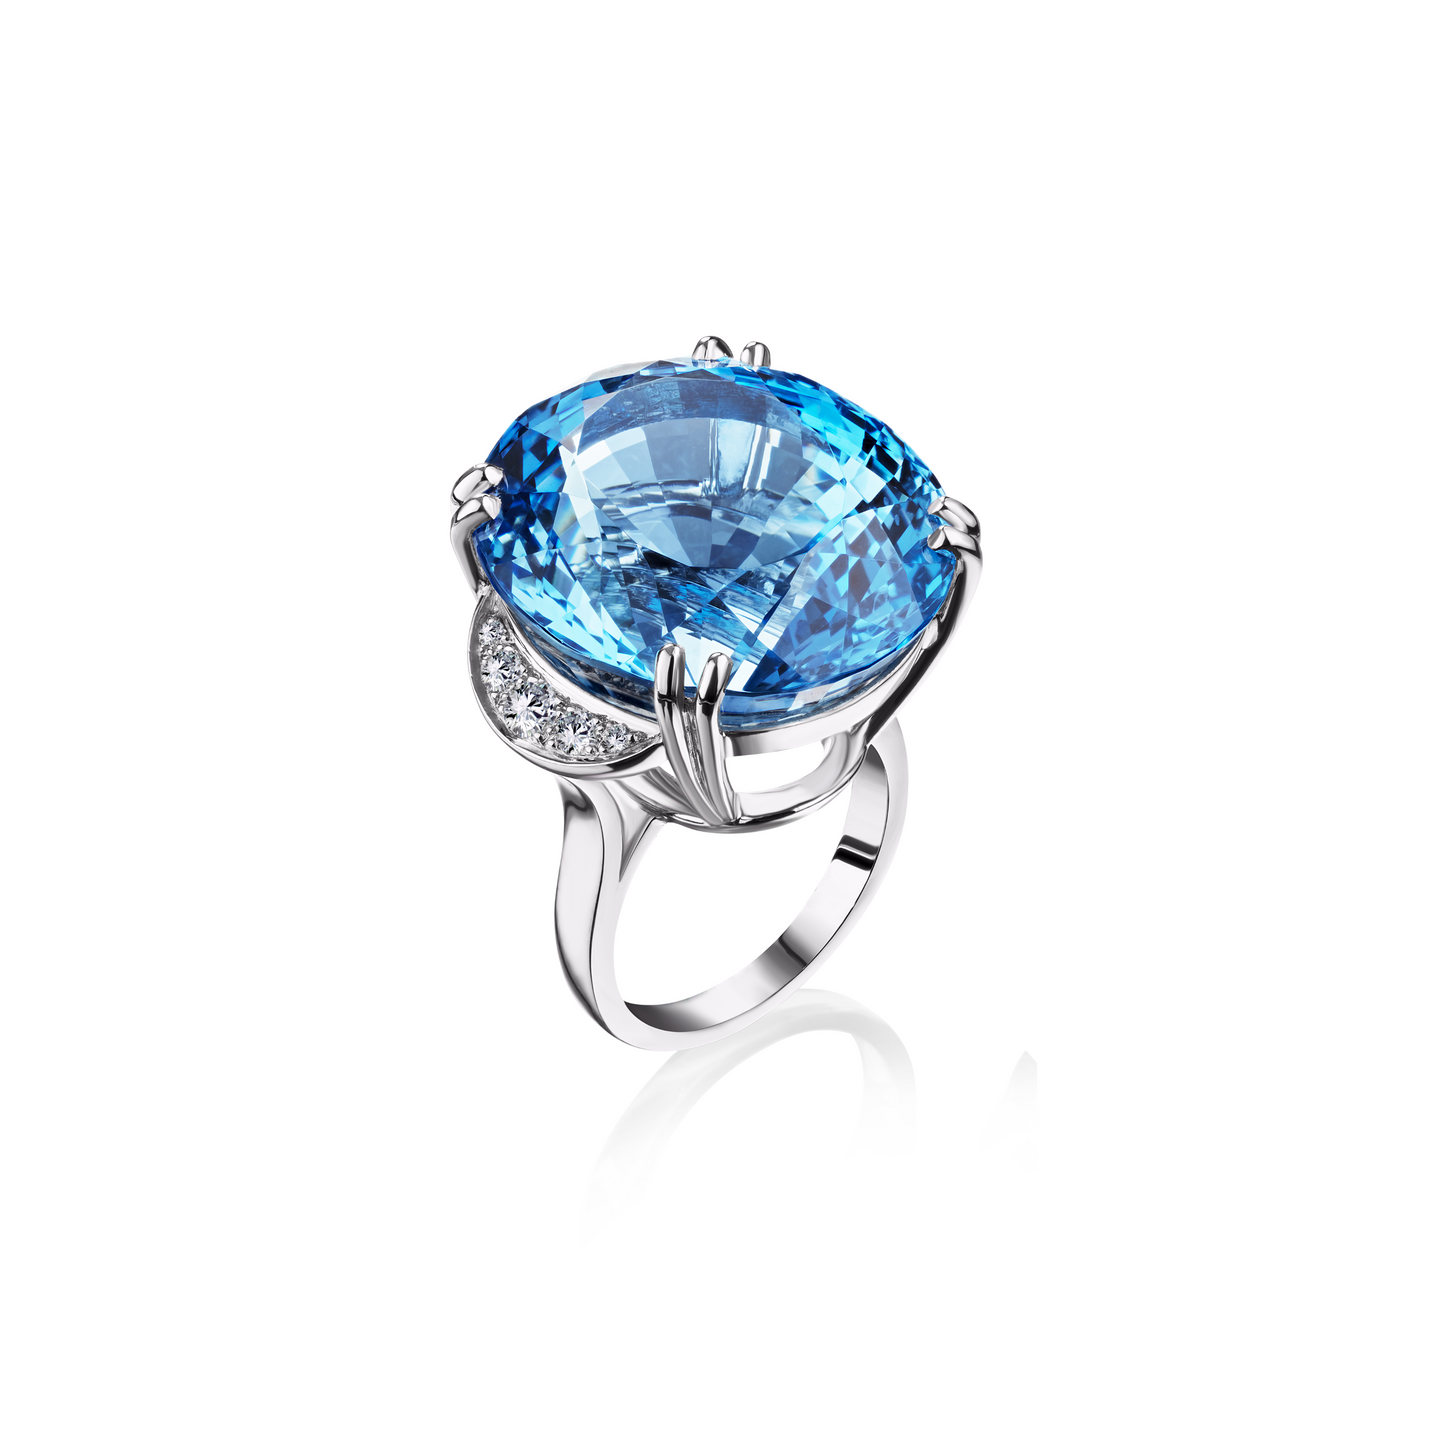 43.18cts Aquamarine and Diamond Ring